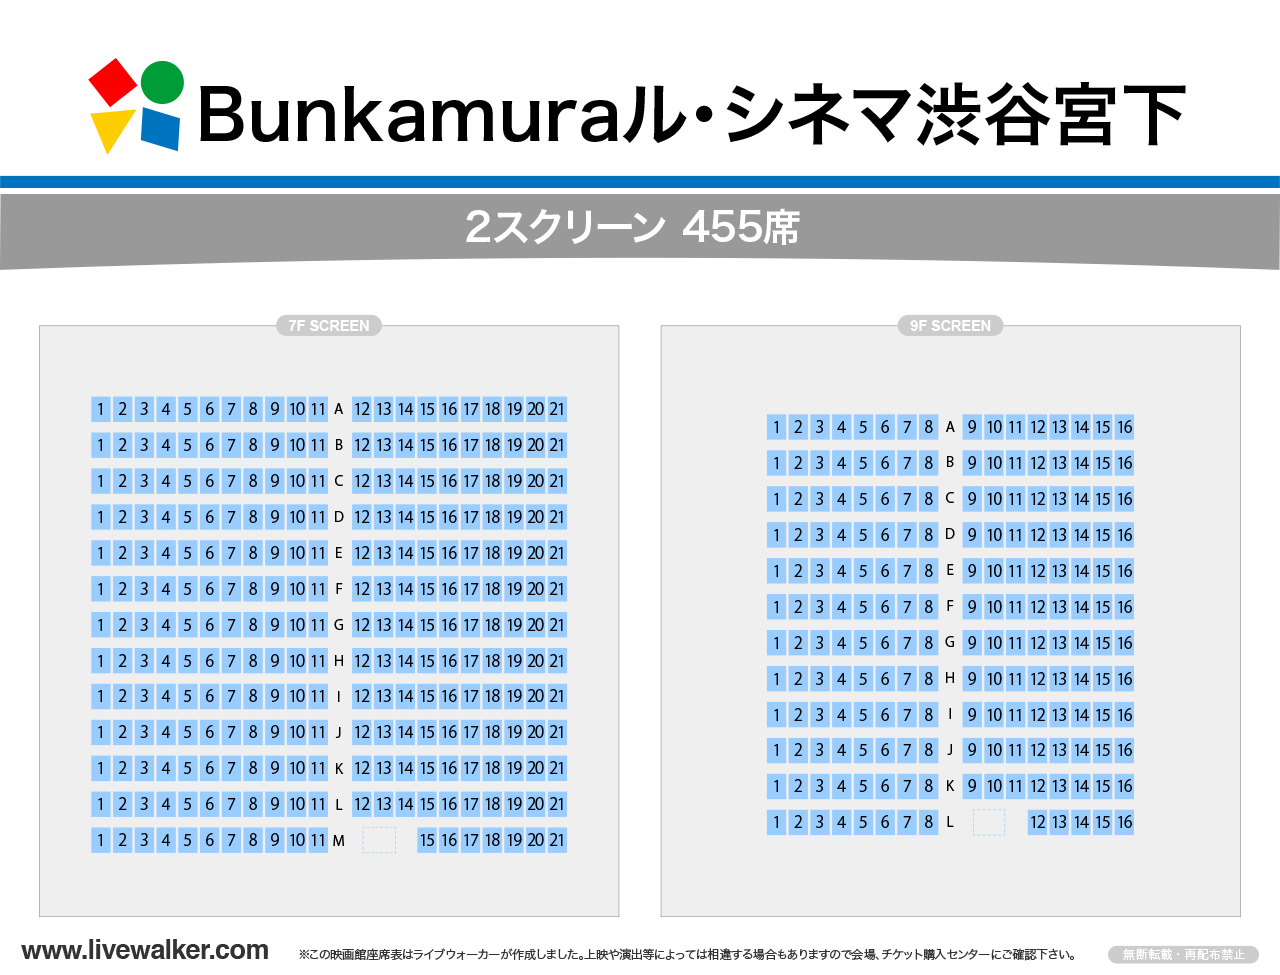 Bunkamuraル・シネマ渋谷宮下の座席表